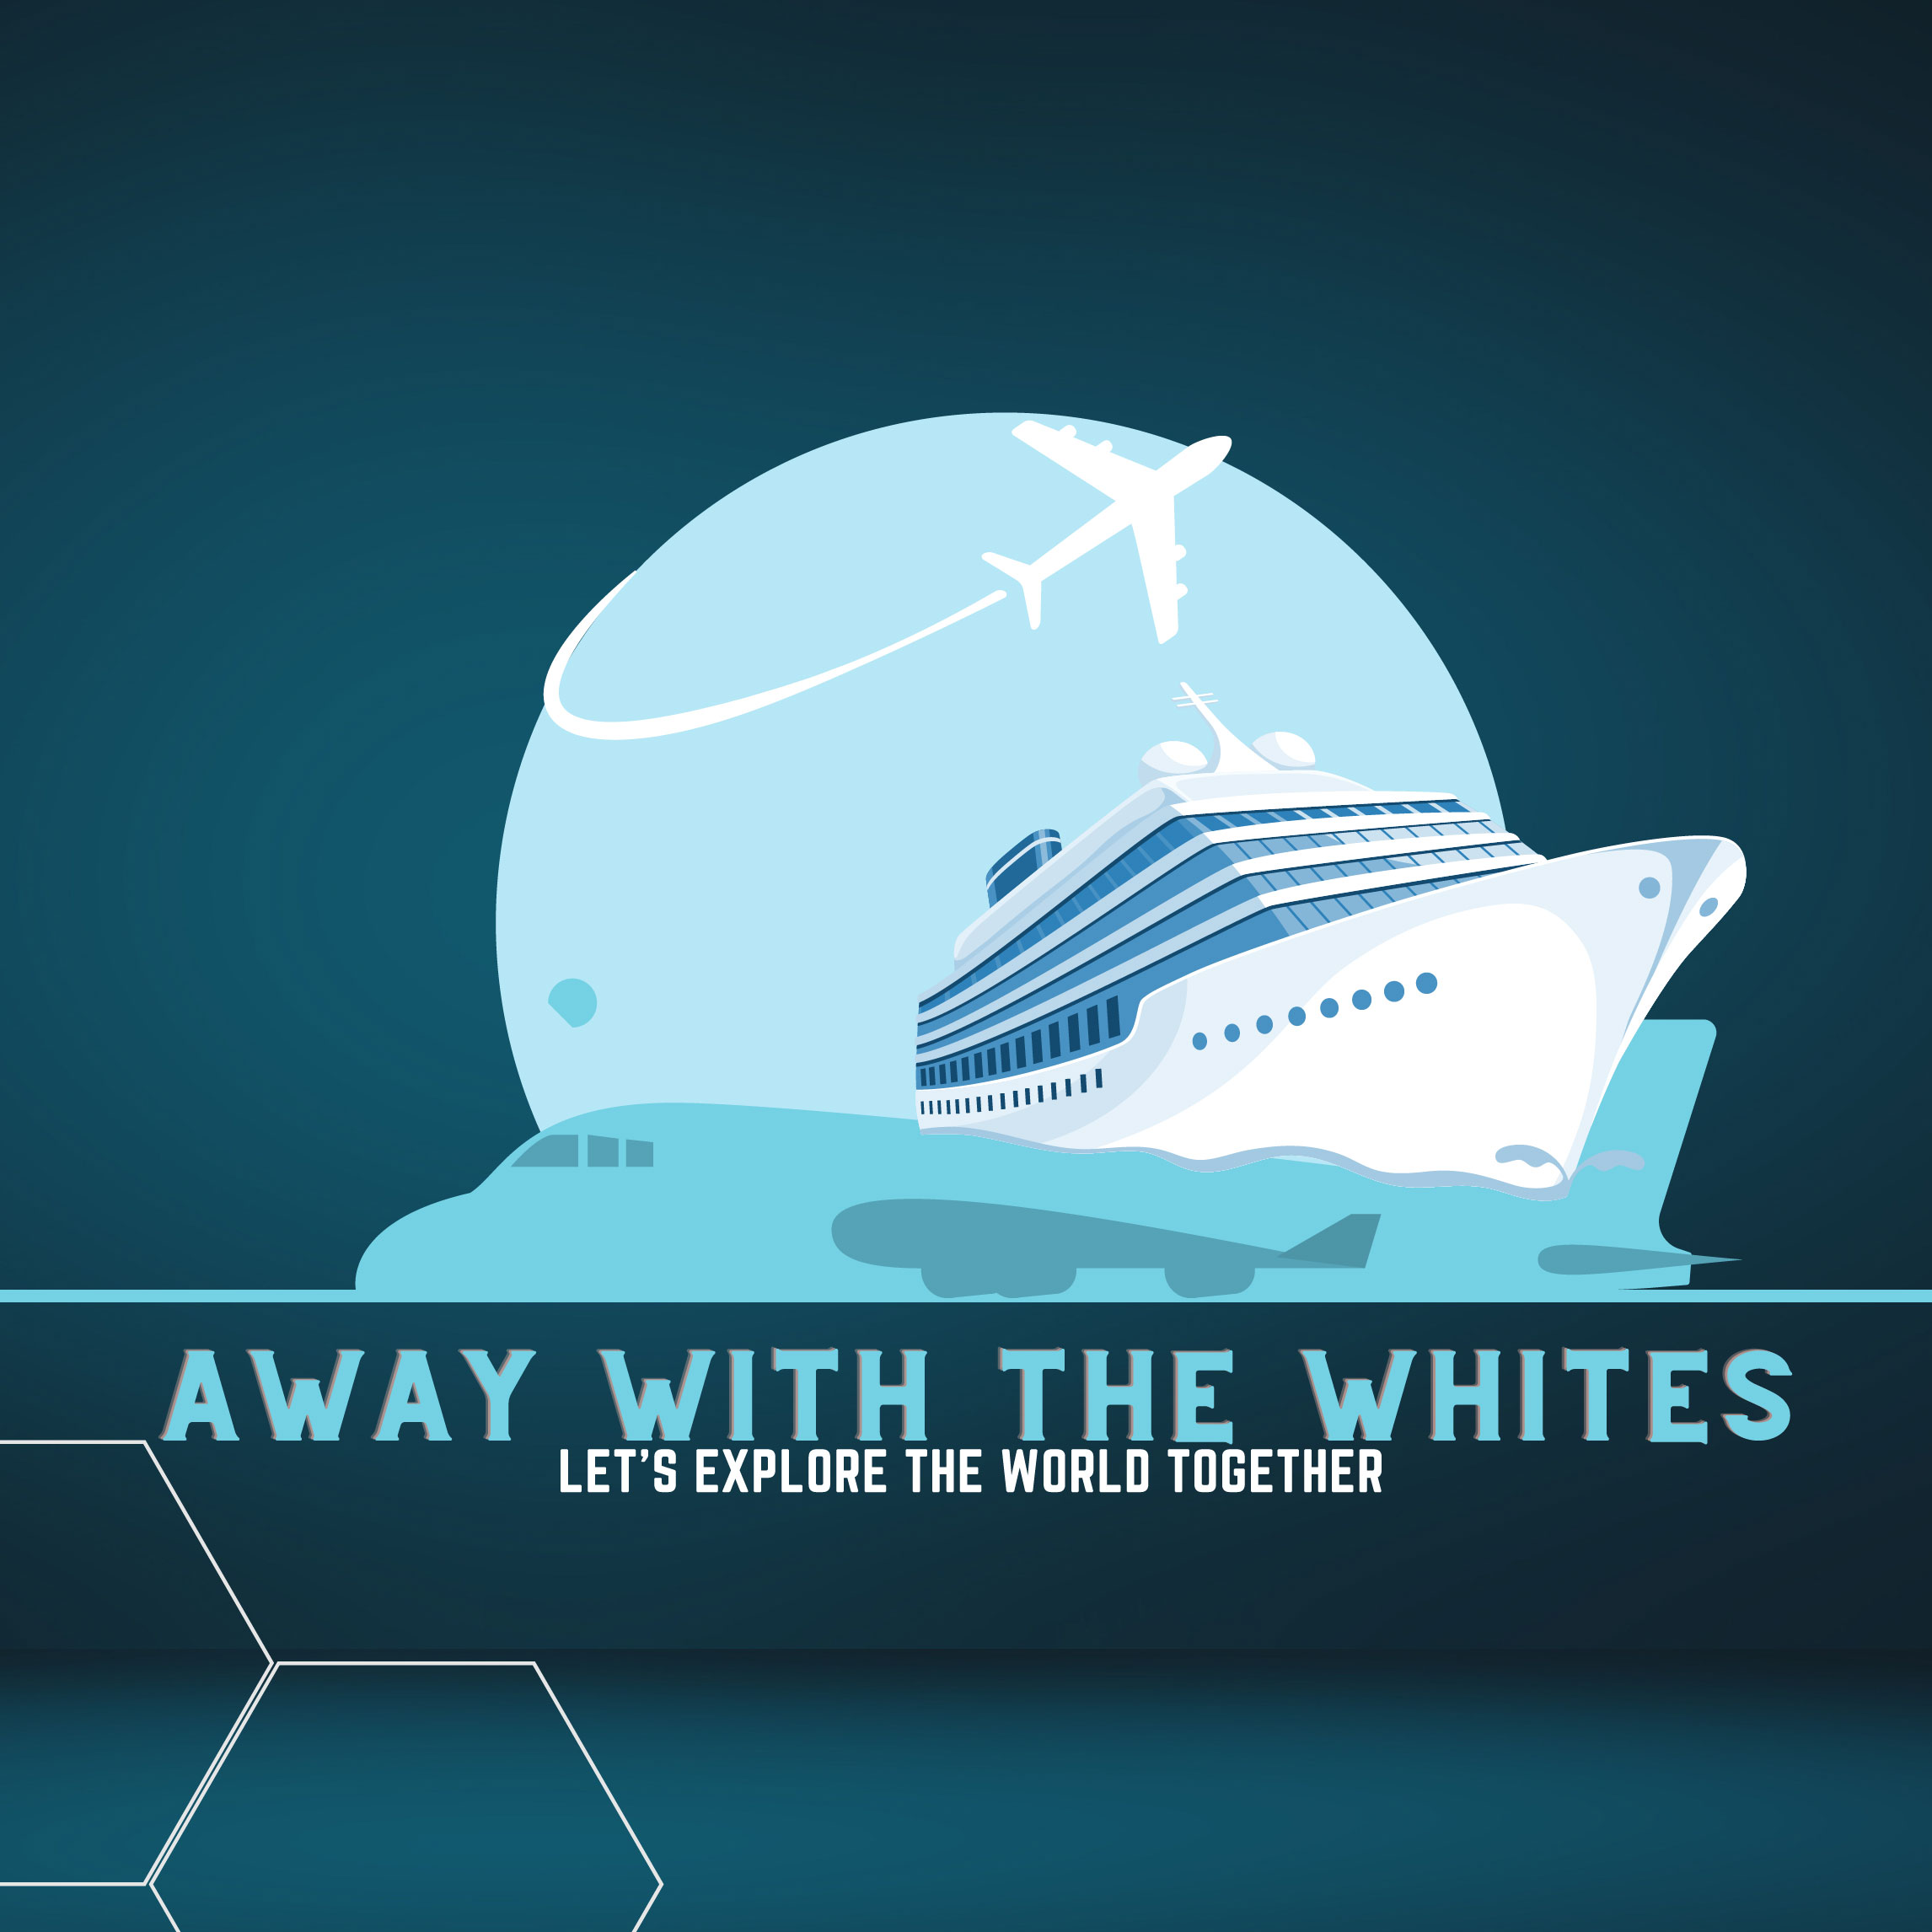 travel logo, ship logo cover image.